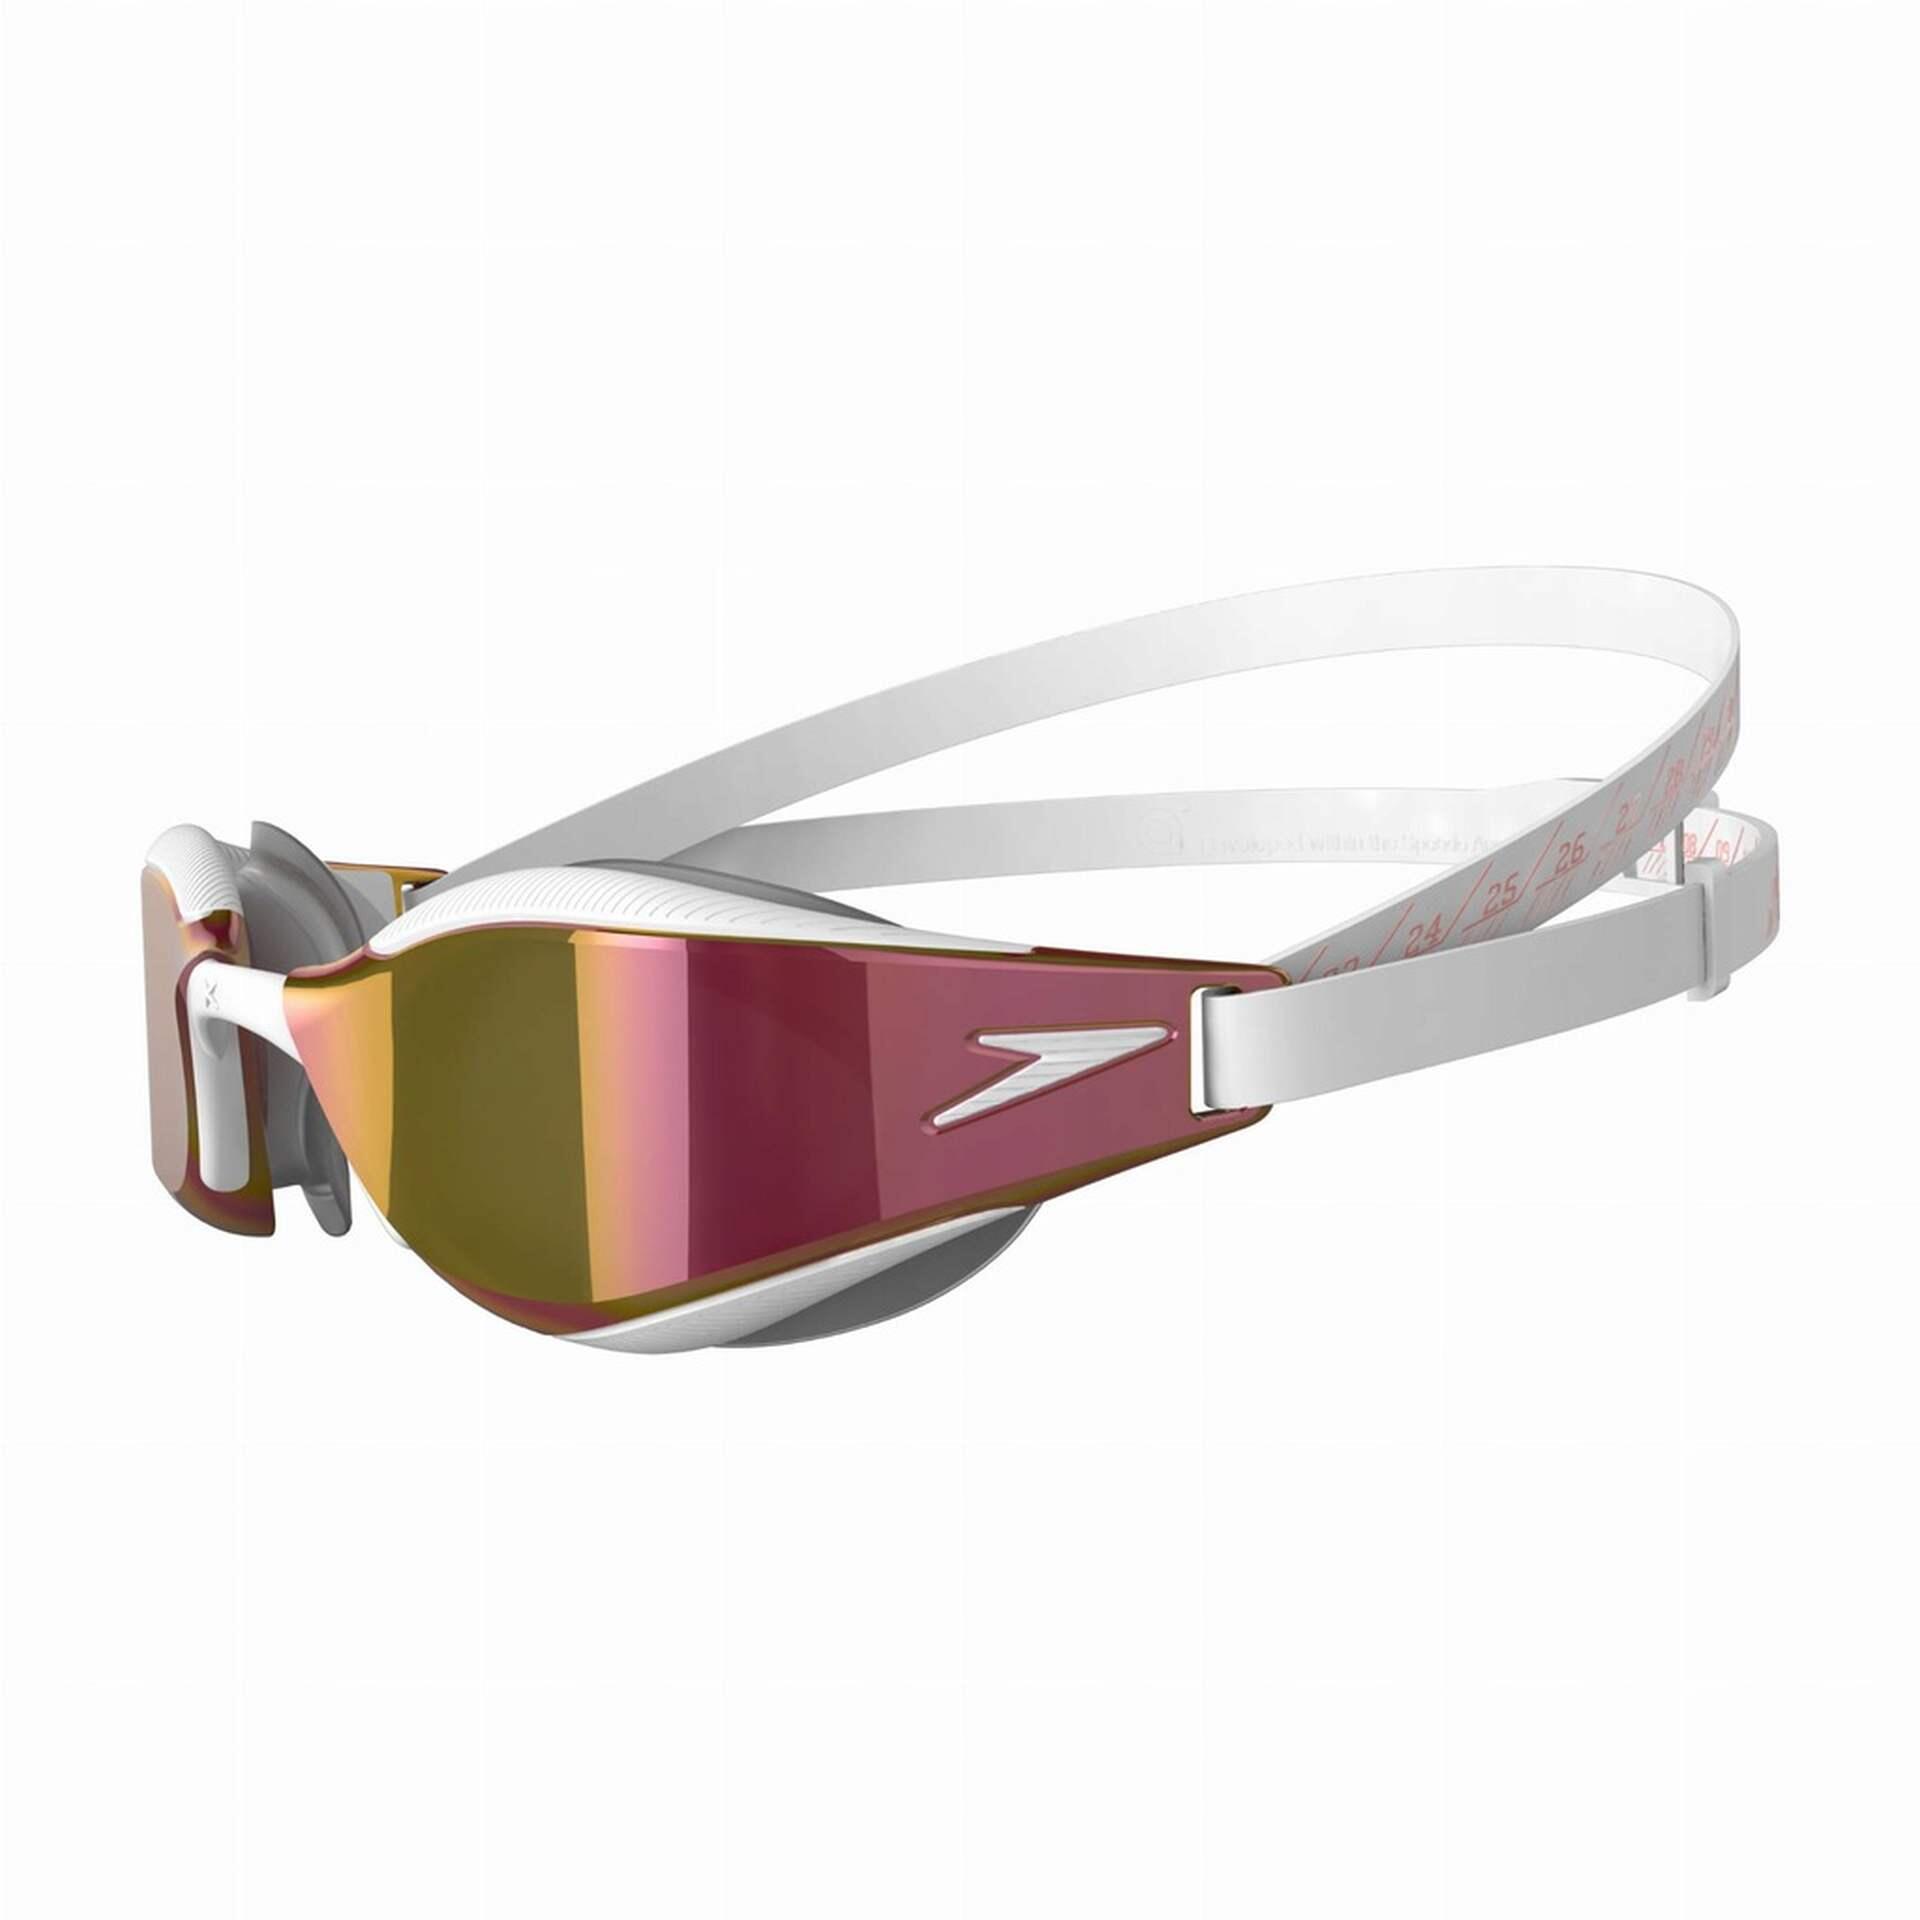 SPEEDO Speedo Fastskin Hyper Elite Mirror Goggles - White / Oxid Grey / Rose Gold